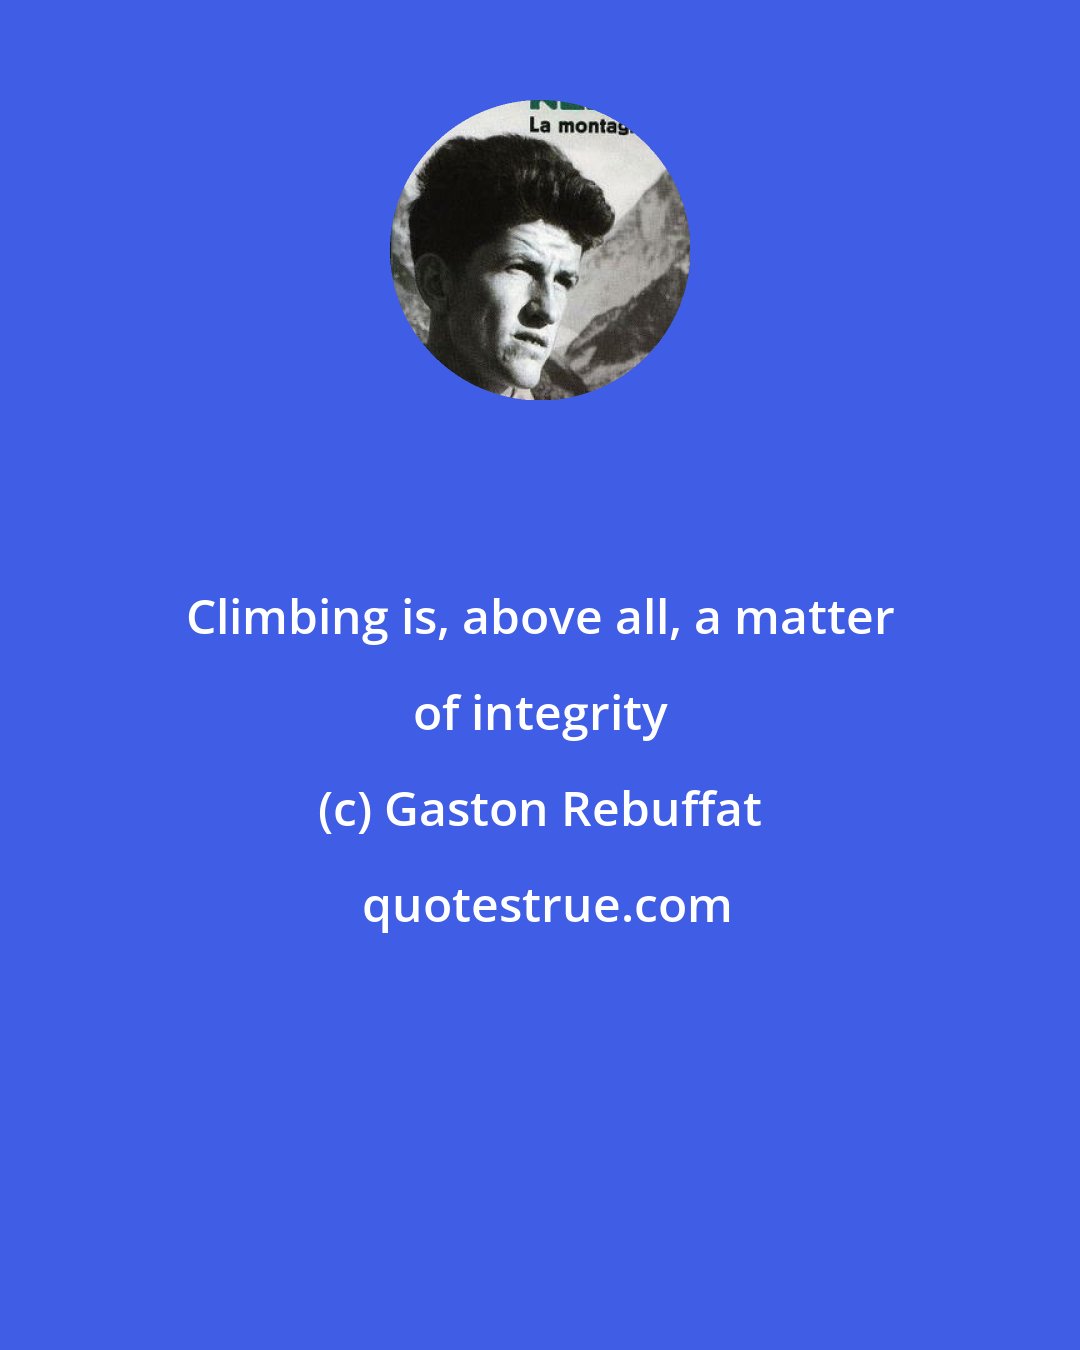 Gaston Rebuffat: Climbing is, above all, a matter of integrity